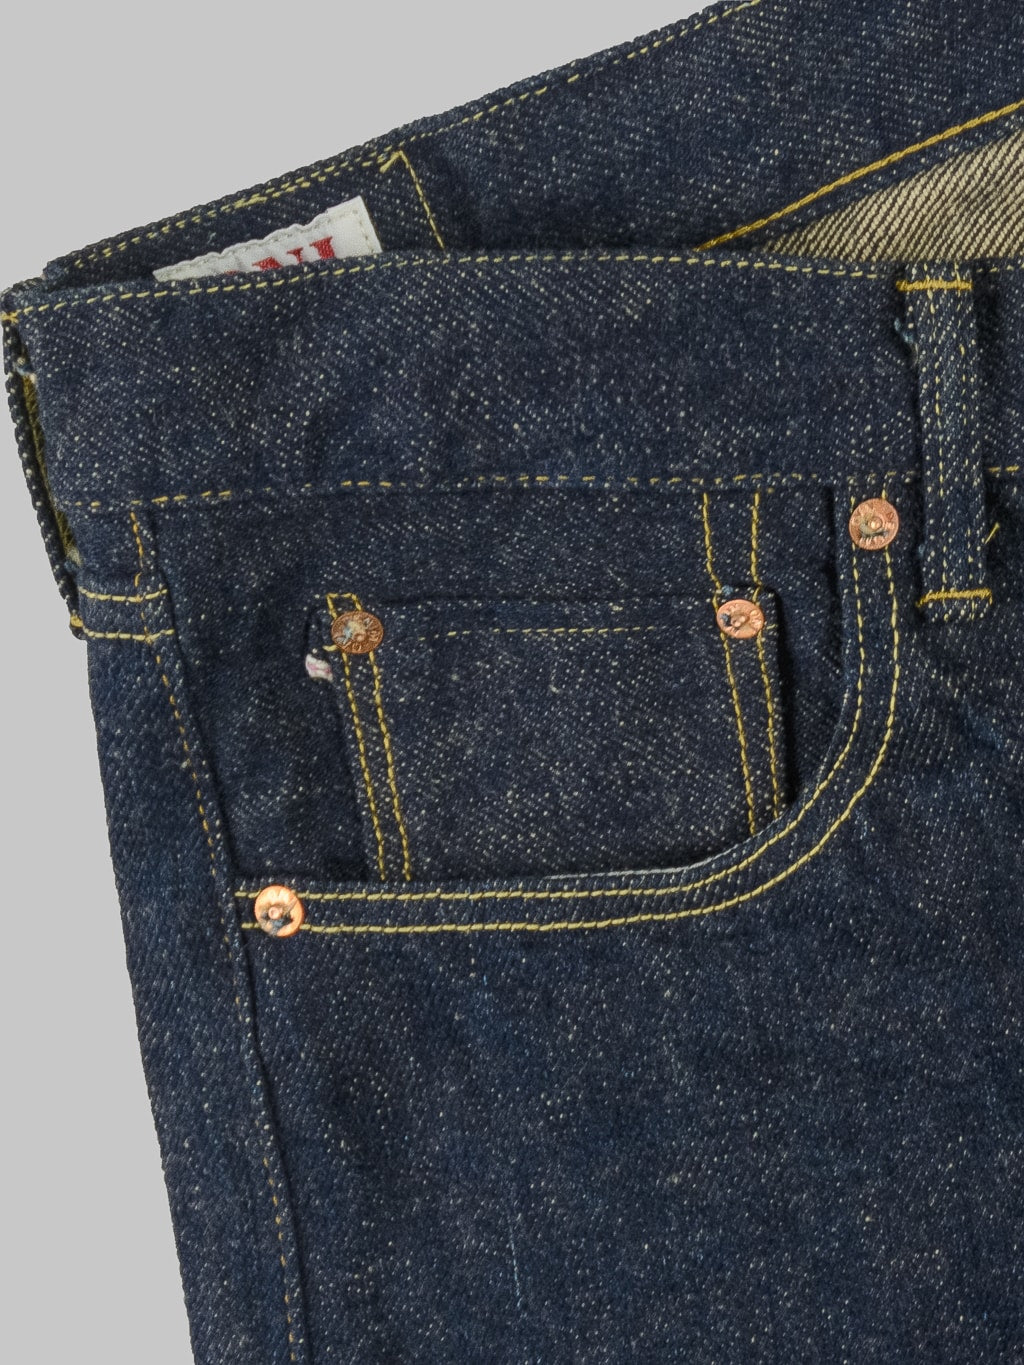 ONI Denim 288ZR Secret Denim 20oz Regular Straight Jeans front pocket